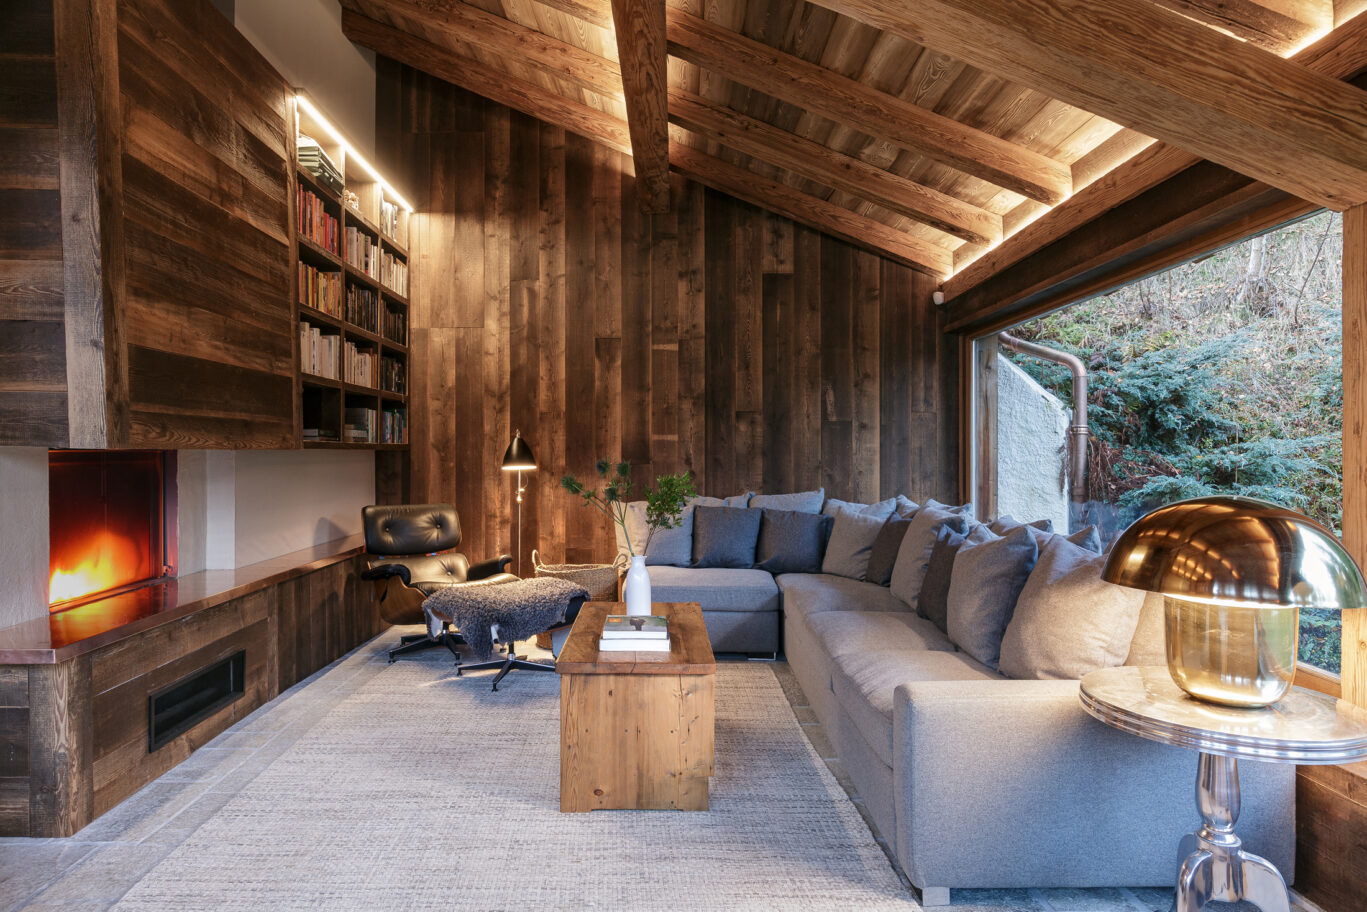 Chamonix luxury chalet fireplace and sitting room